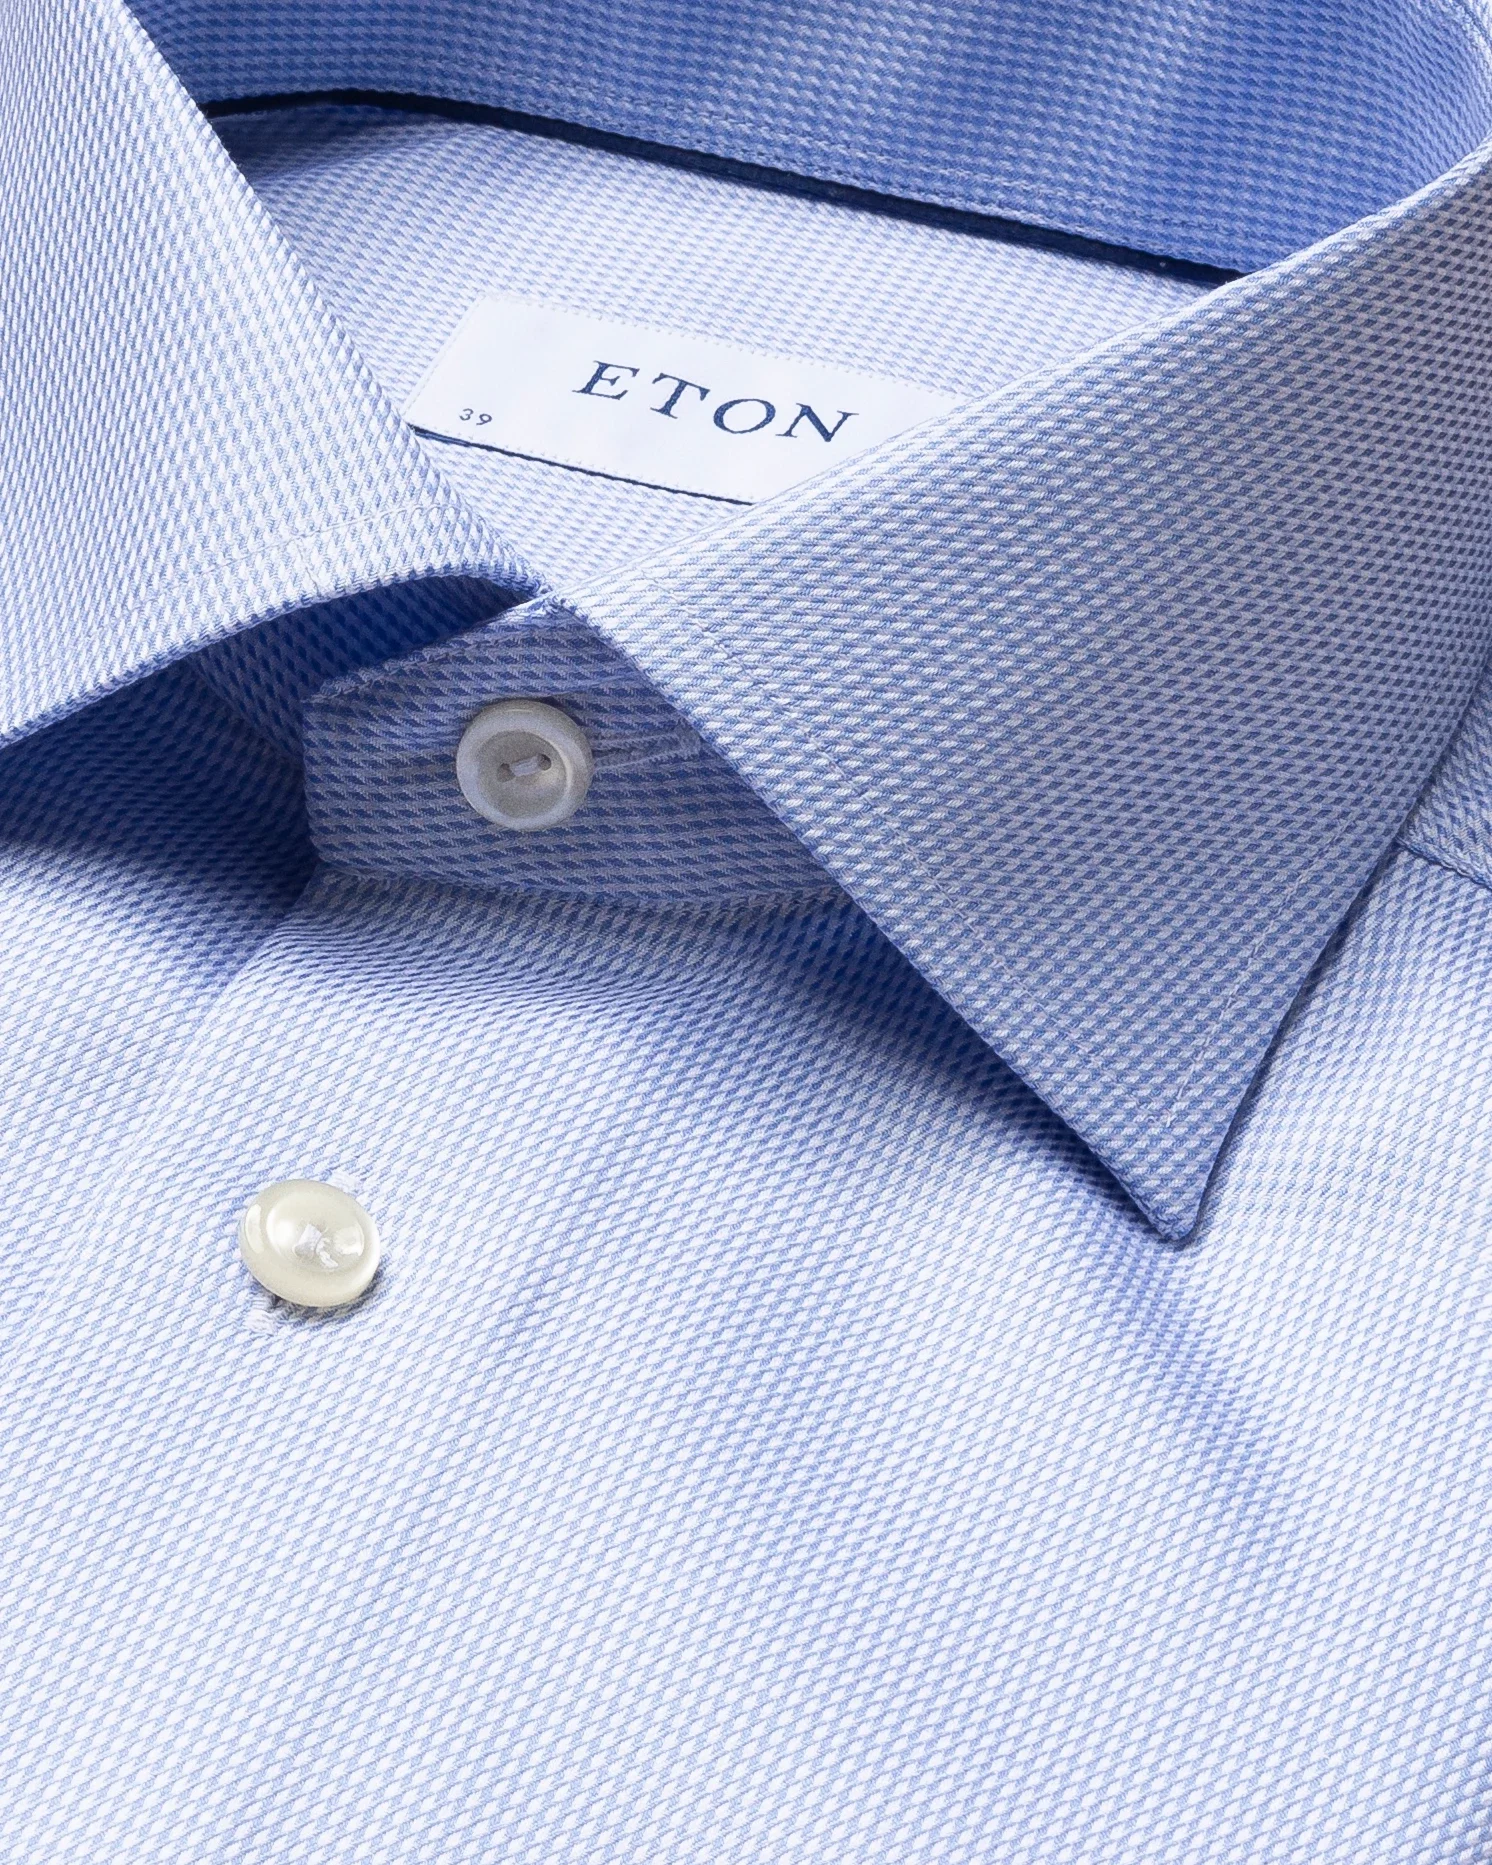 Eton - sky blue twill shirt